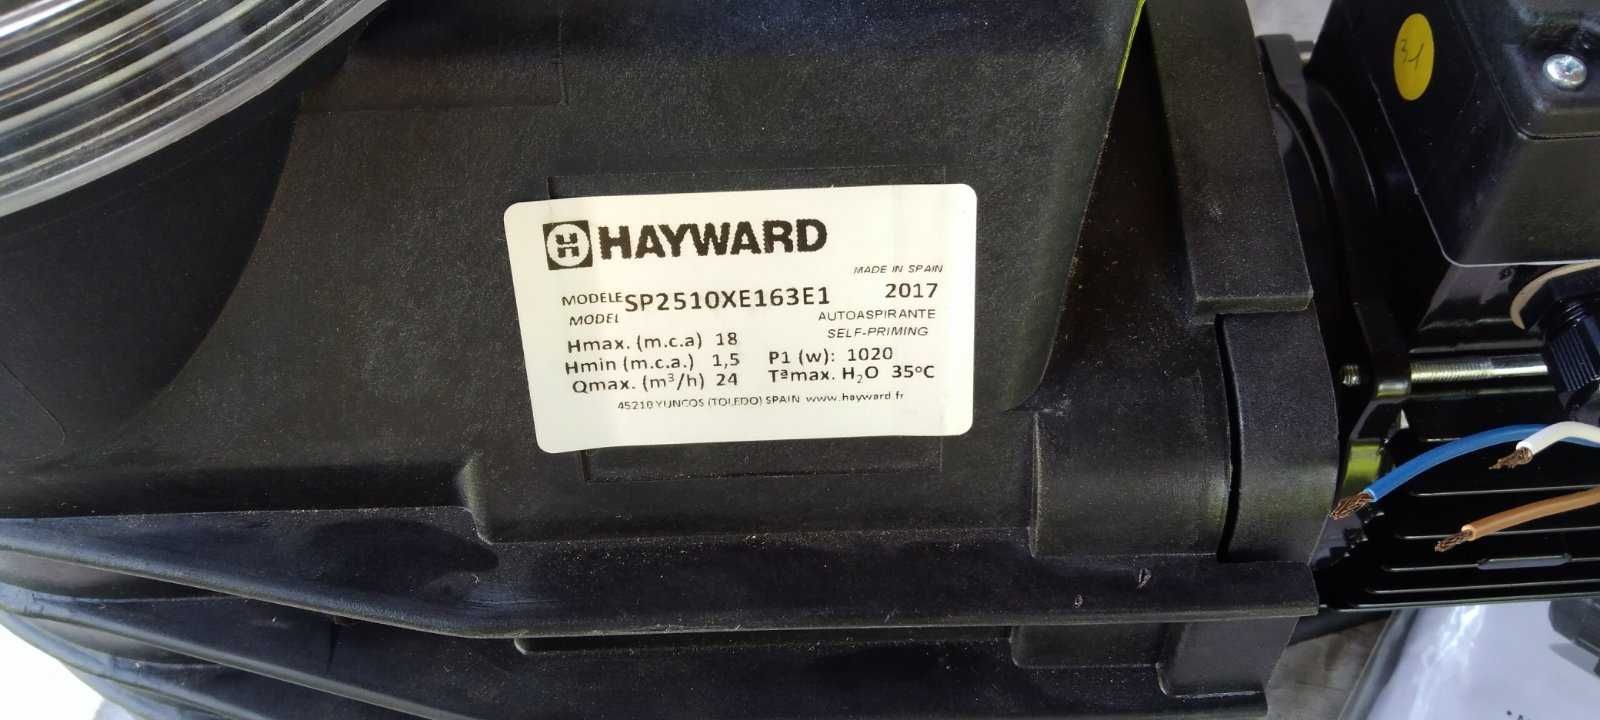 Насос для бассейна Hayward SP2510XE163E1 EP MAX(Испания) 24 м3/час1кВт